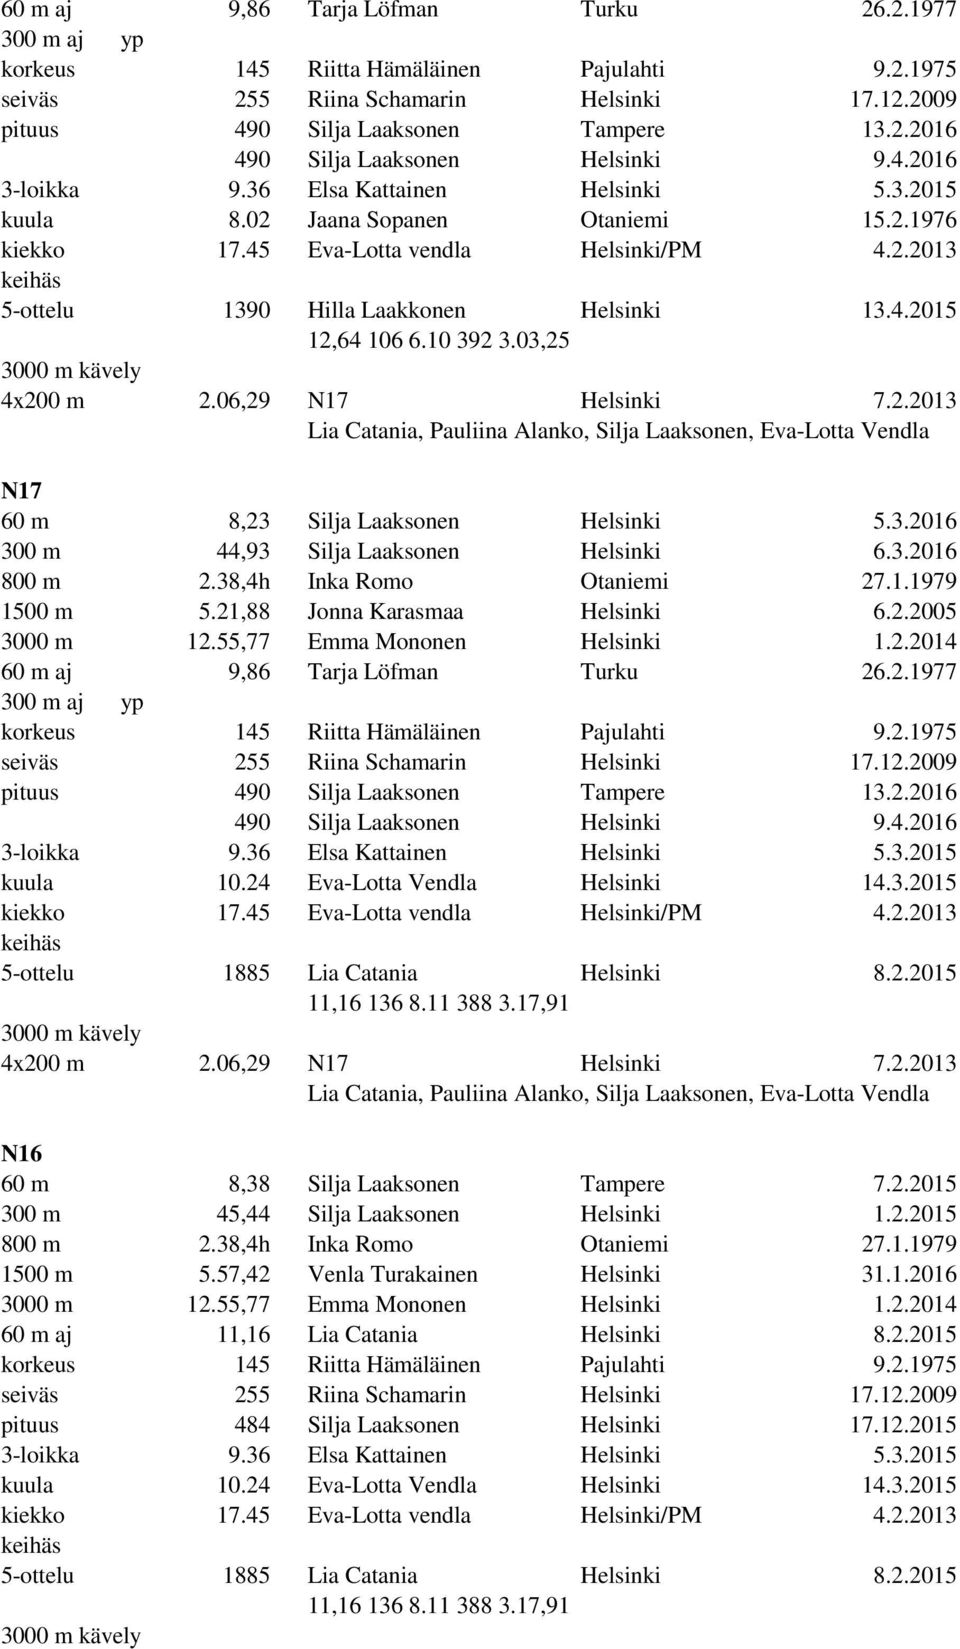 17,91 N16 60 m 8,38 Silja Laaksonen Tampere 7.2.2015 300 m 45,44 Silja Laaksonen Helsinki 1.2.2015 1500 m 5.